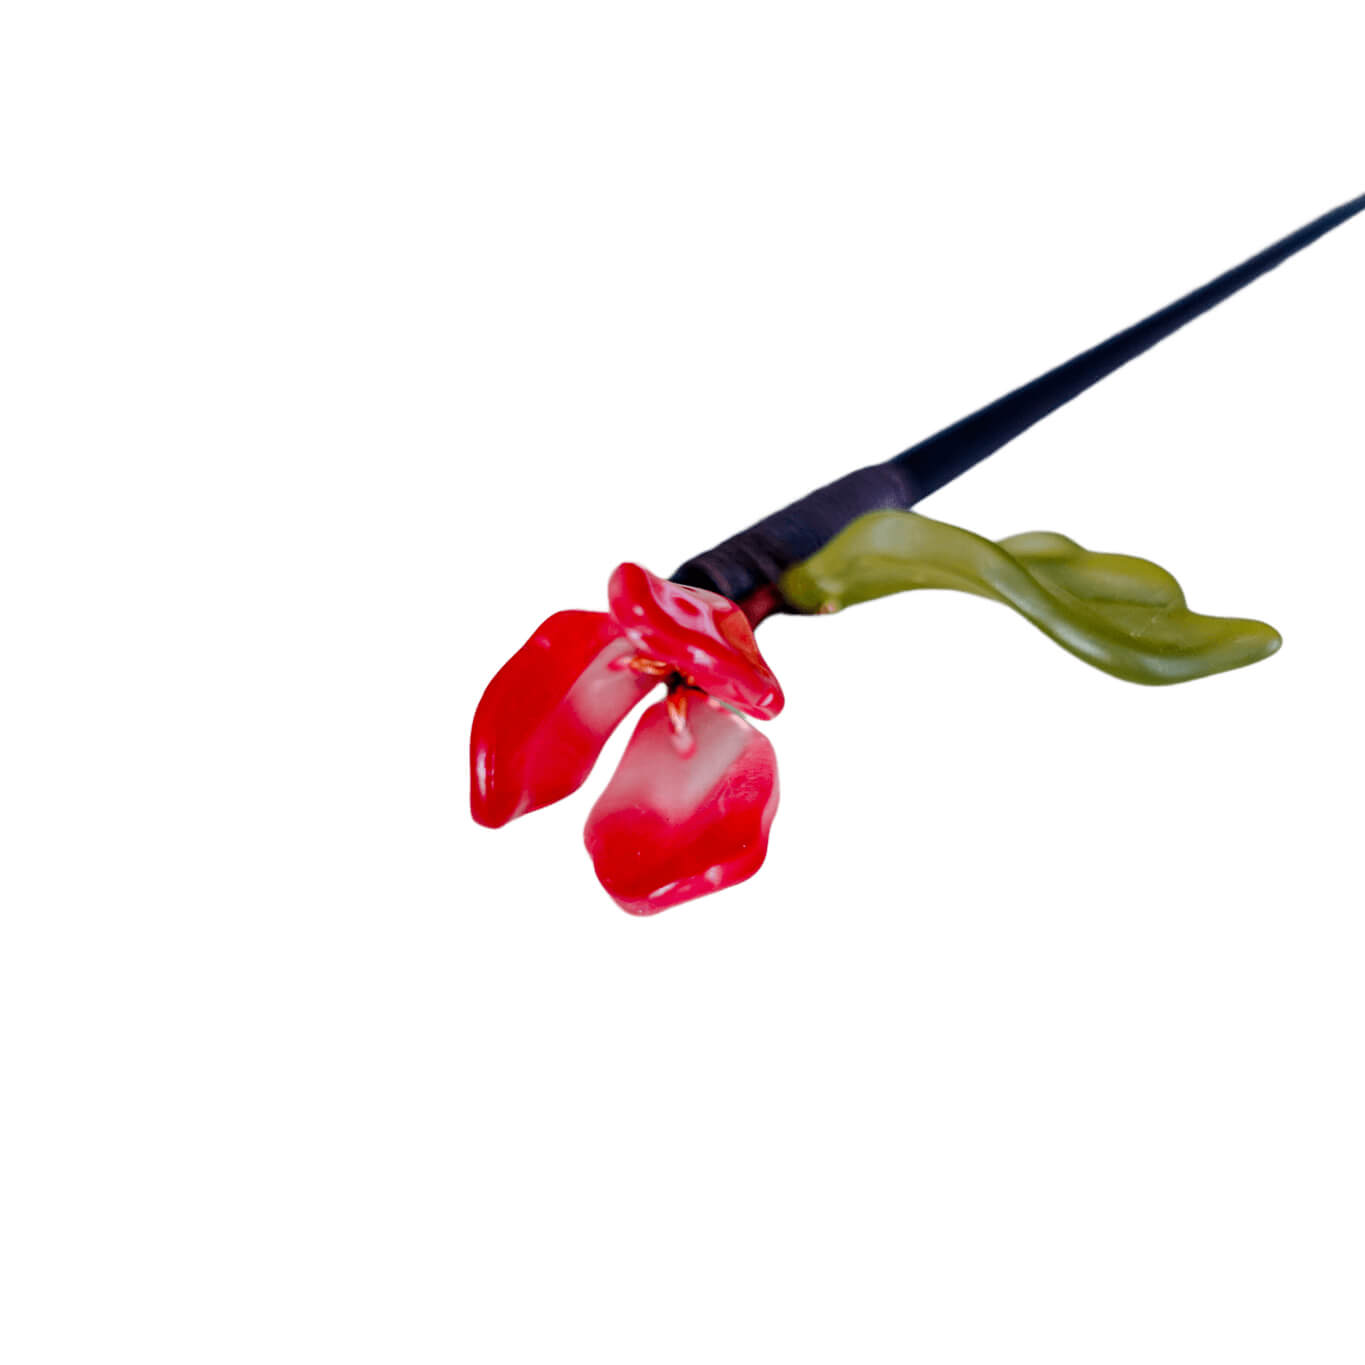 XIAOHUA - Tulip Wood Hairpin